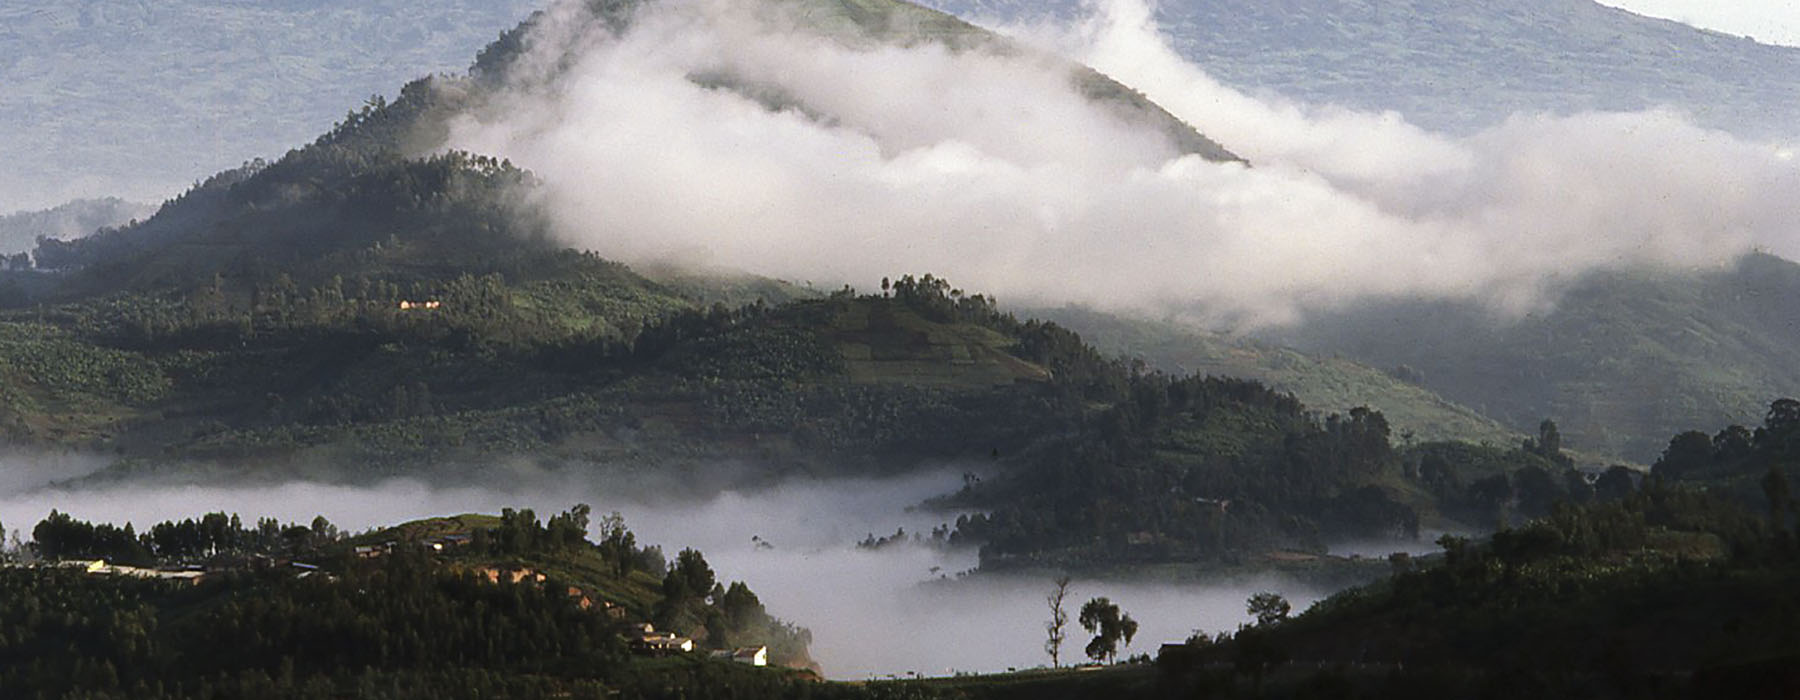 All our Rwanda<br class="hidden-md hidden-lg" /> Luxury Holidays